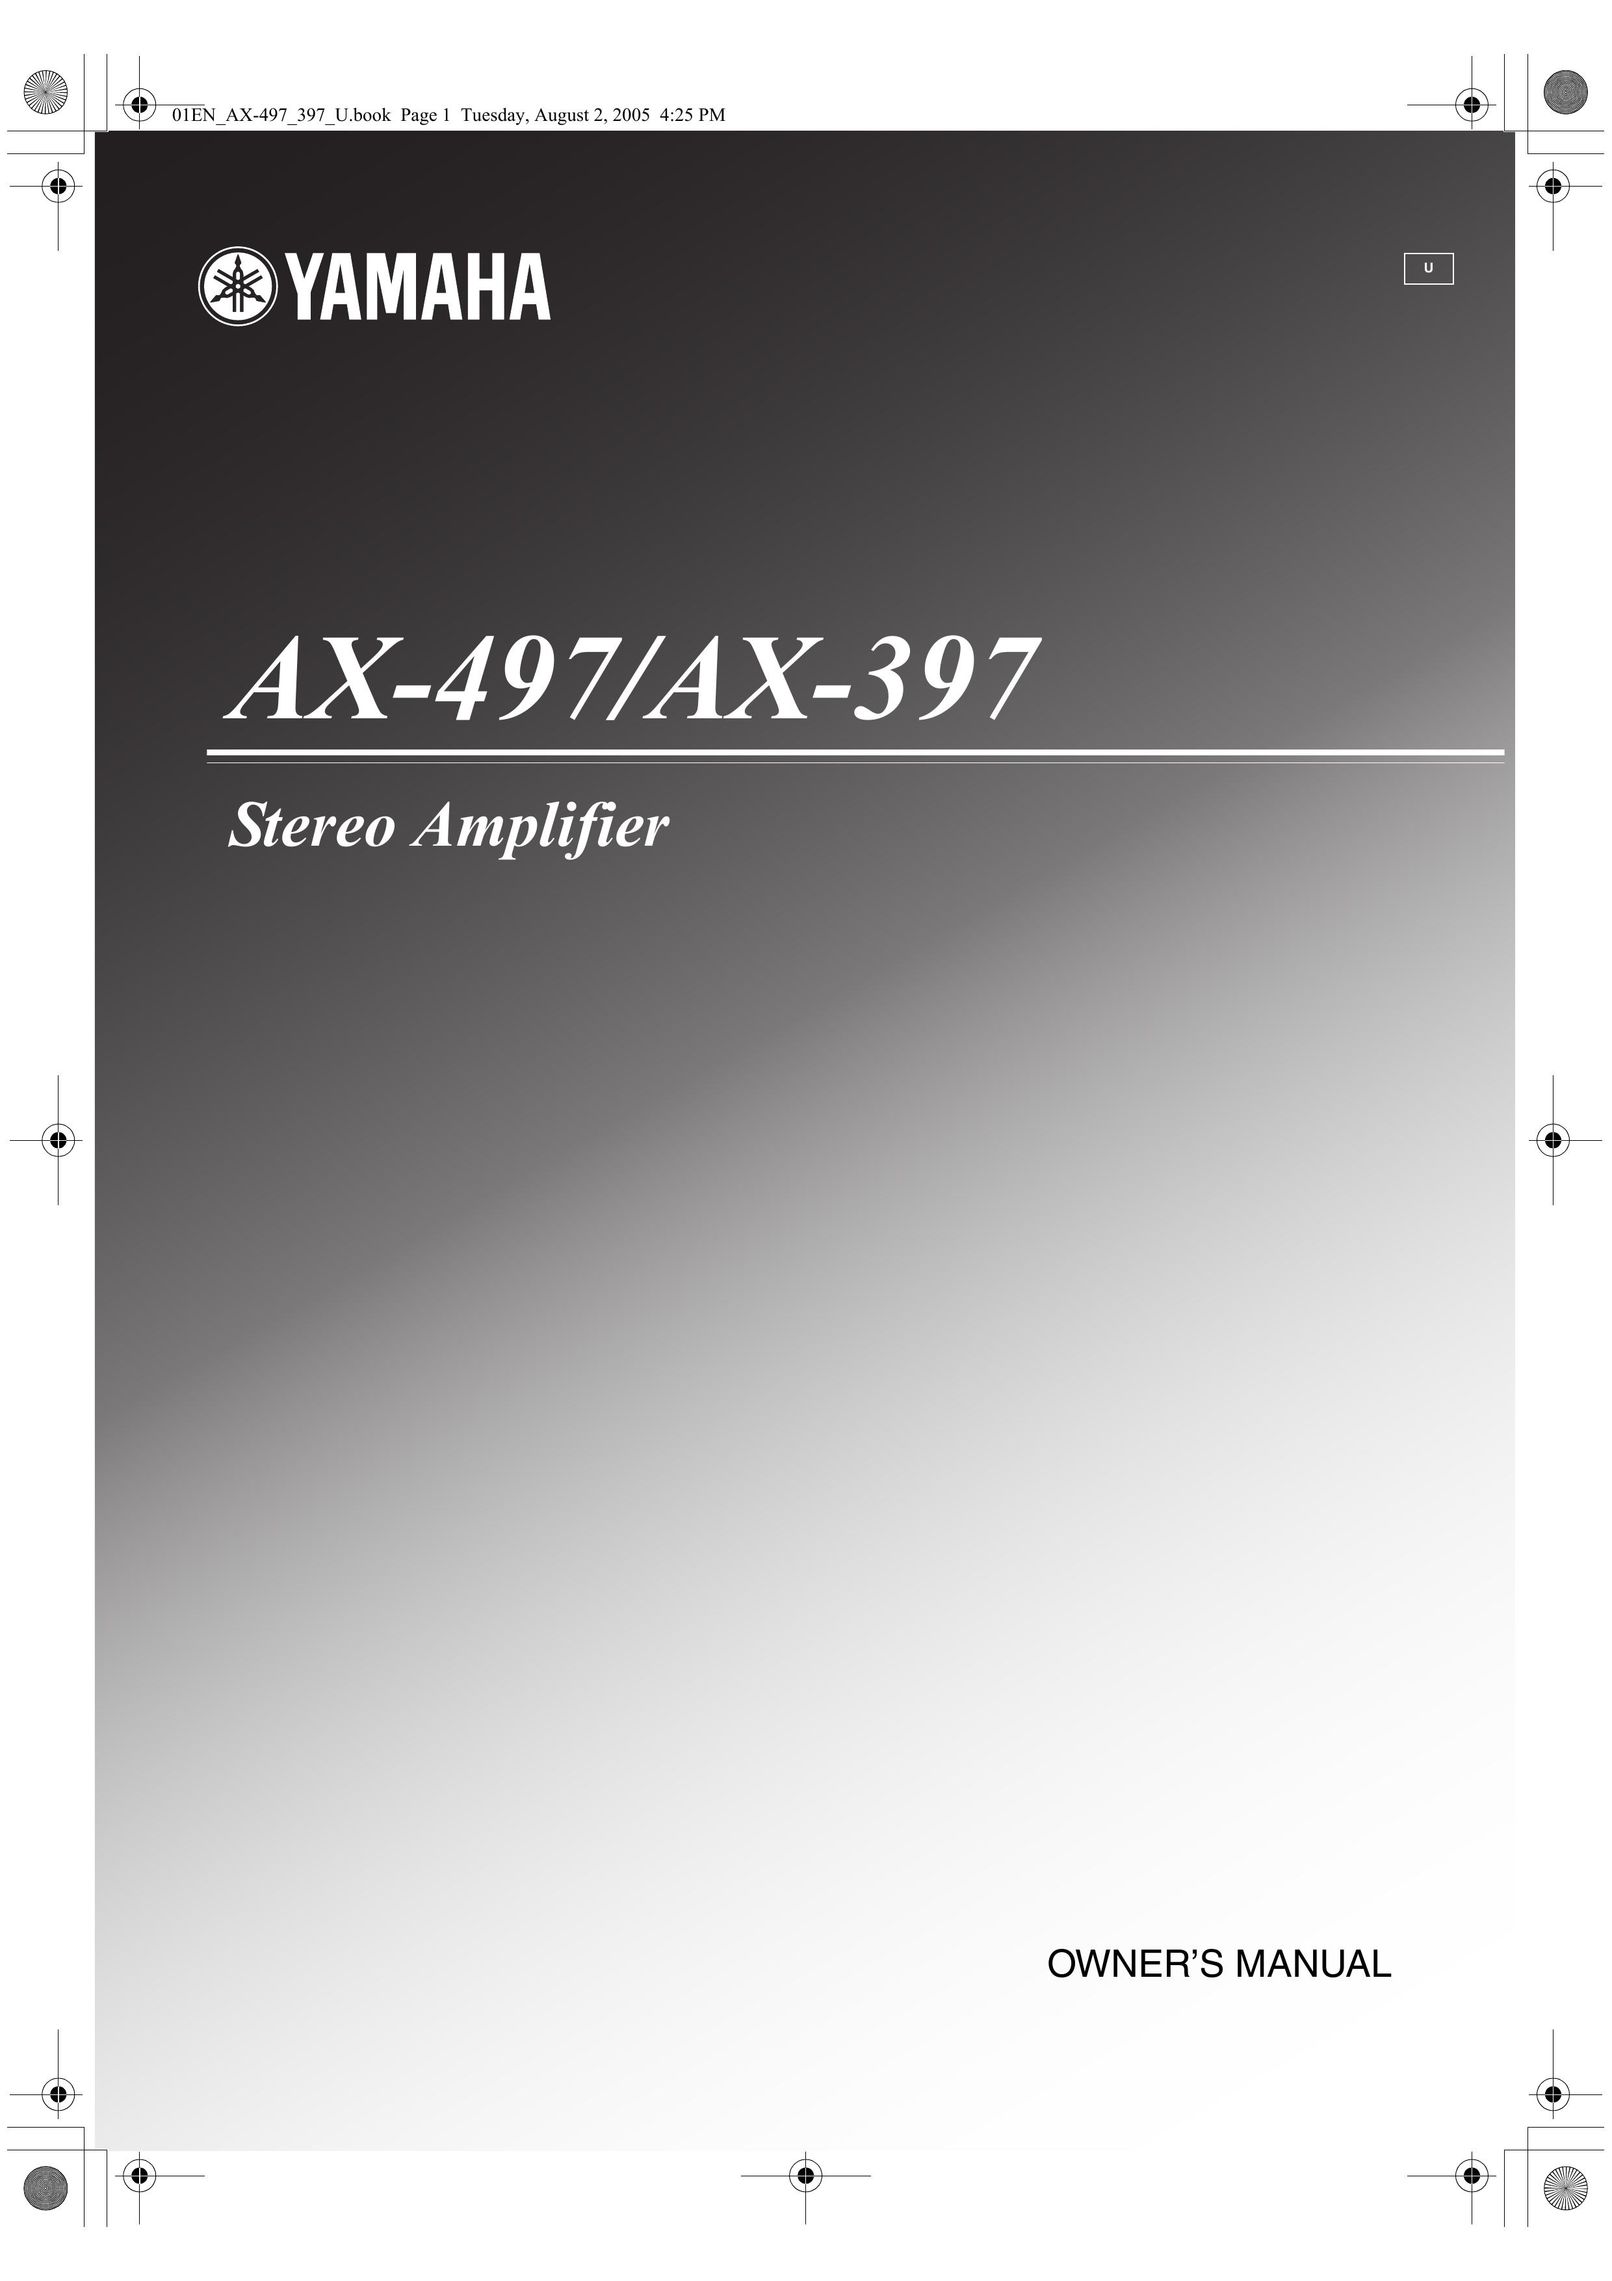 Yamaha AX-497 Stereo Amplifier User Manual